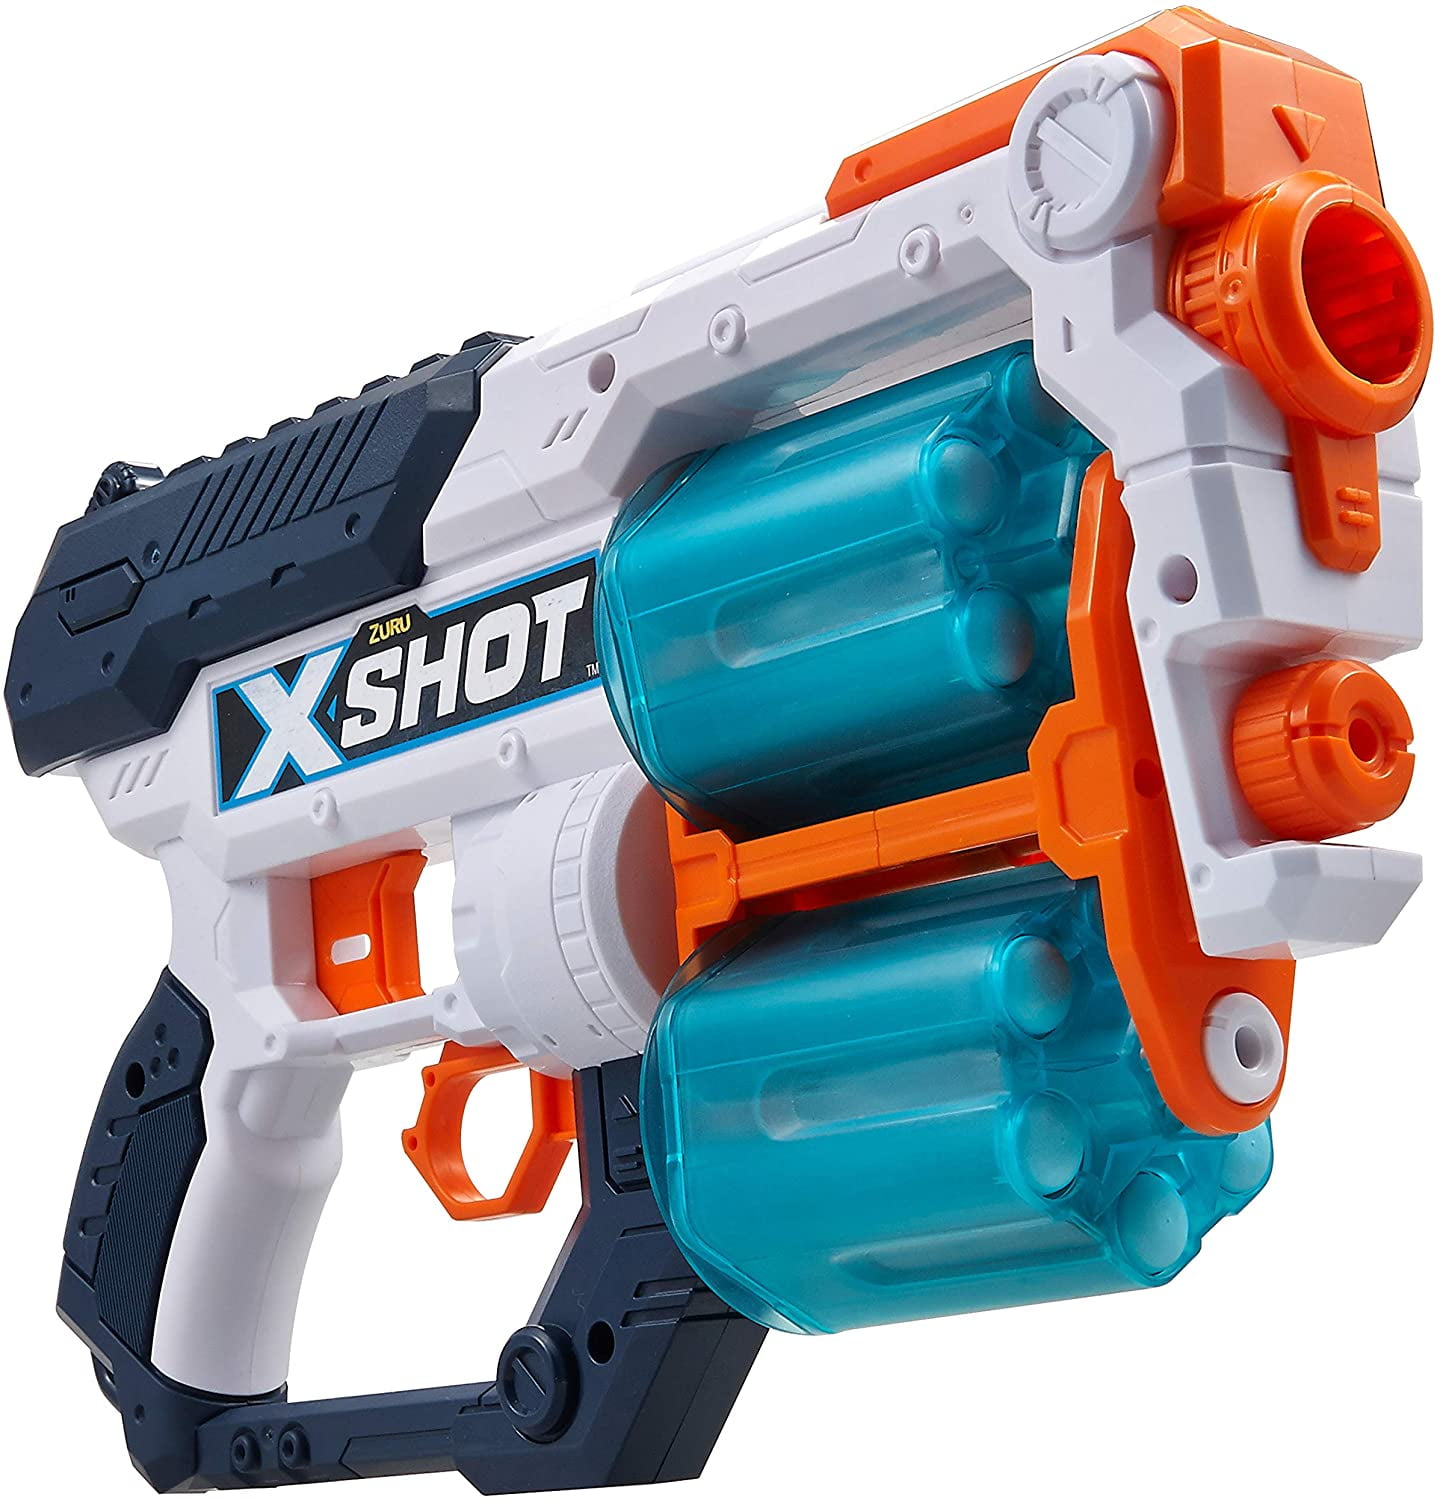 JUSTSPARKLE NEW ZURU X-SHOT MAX ATTACK BLASTER 